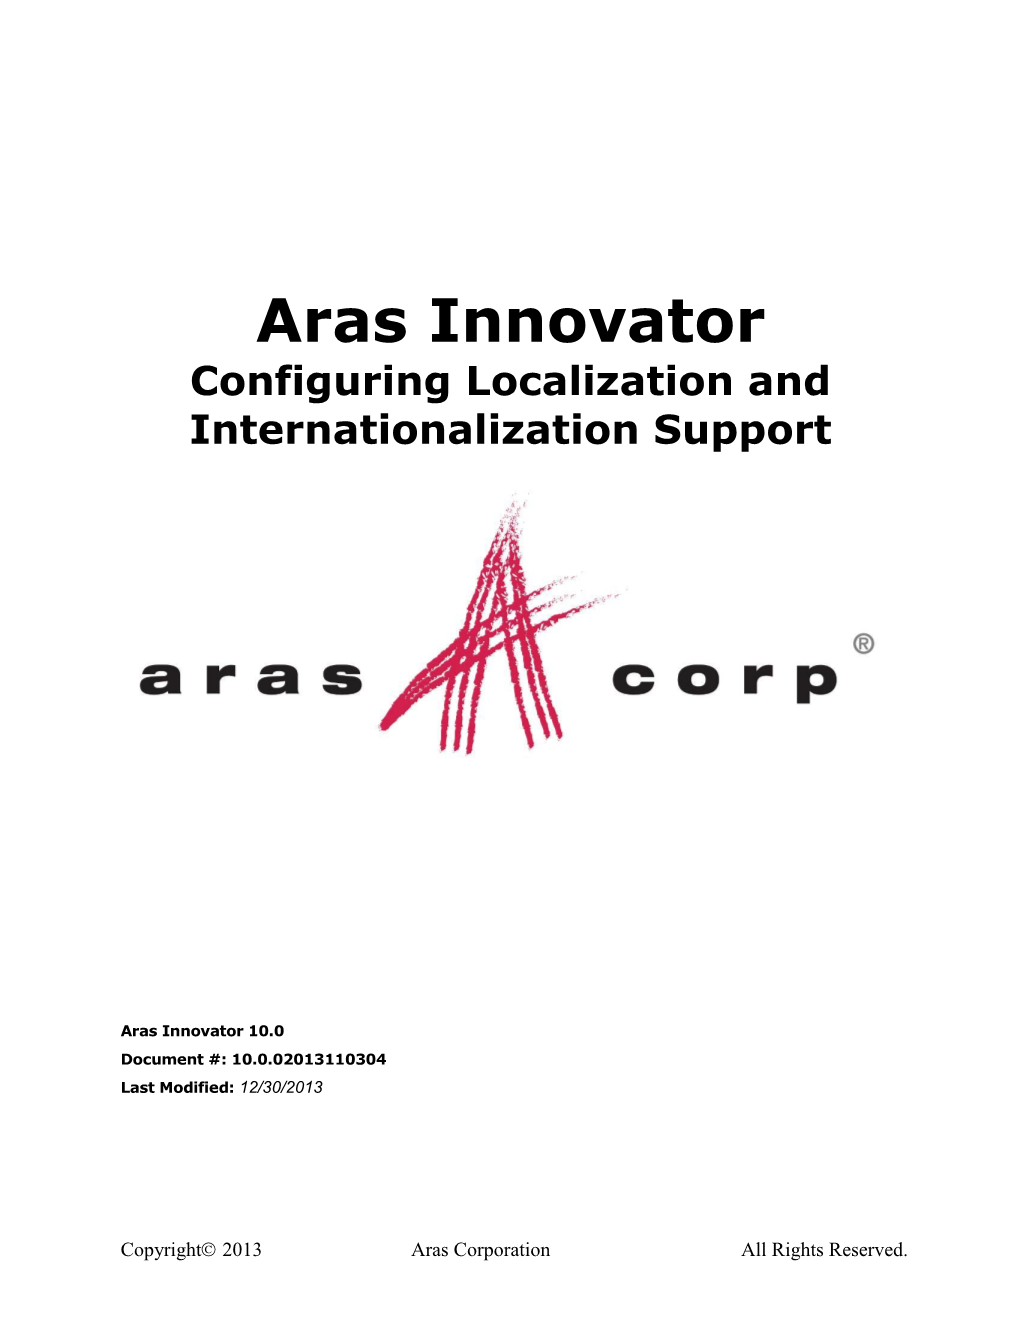 Aras Innovator Configuring Localization and Internationalization Support